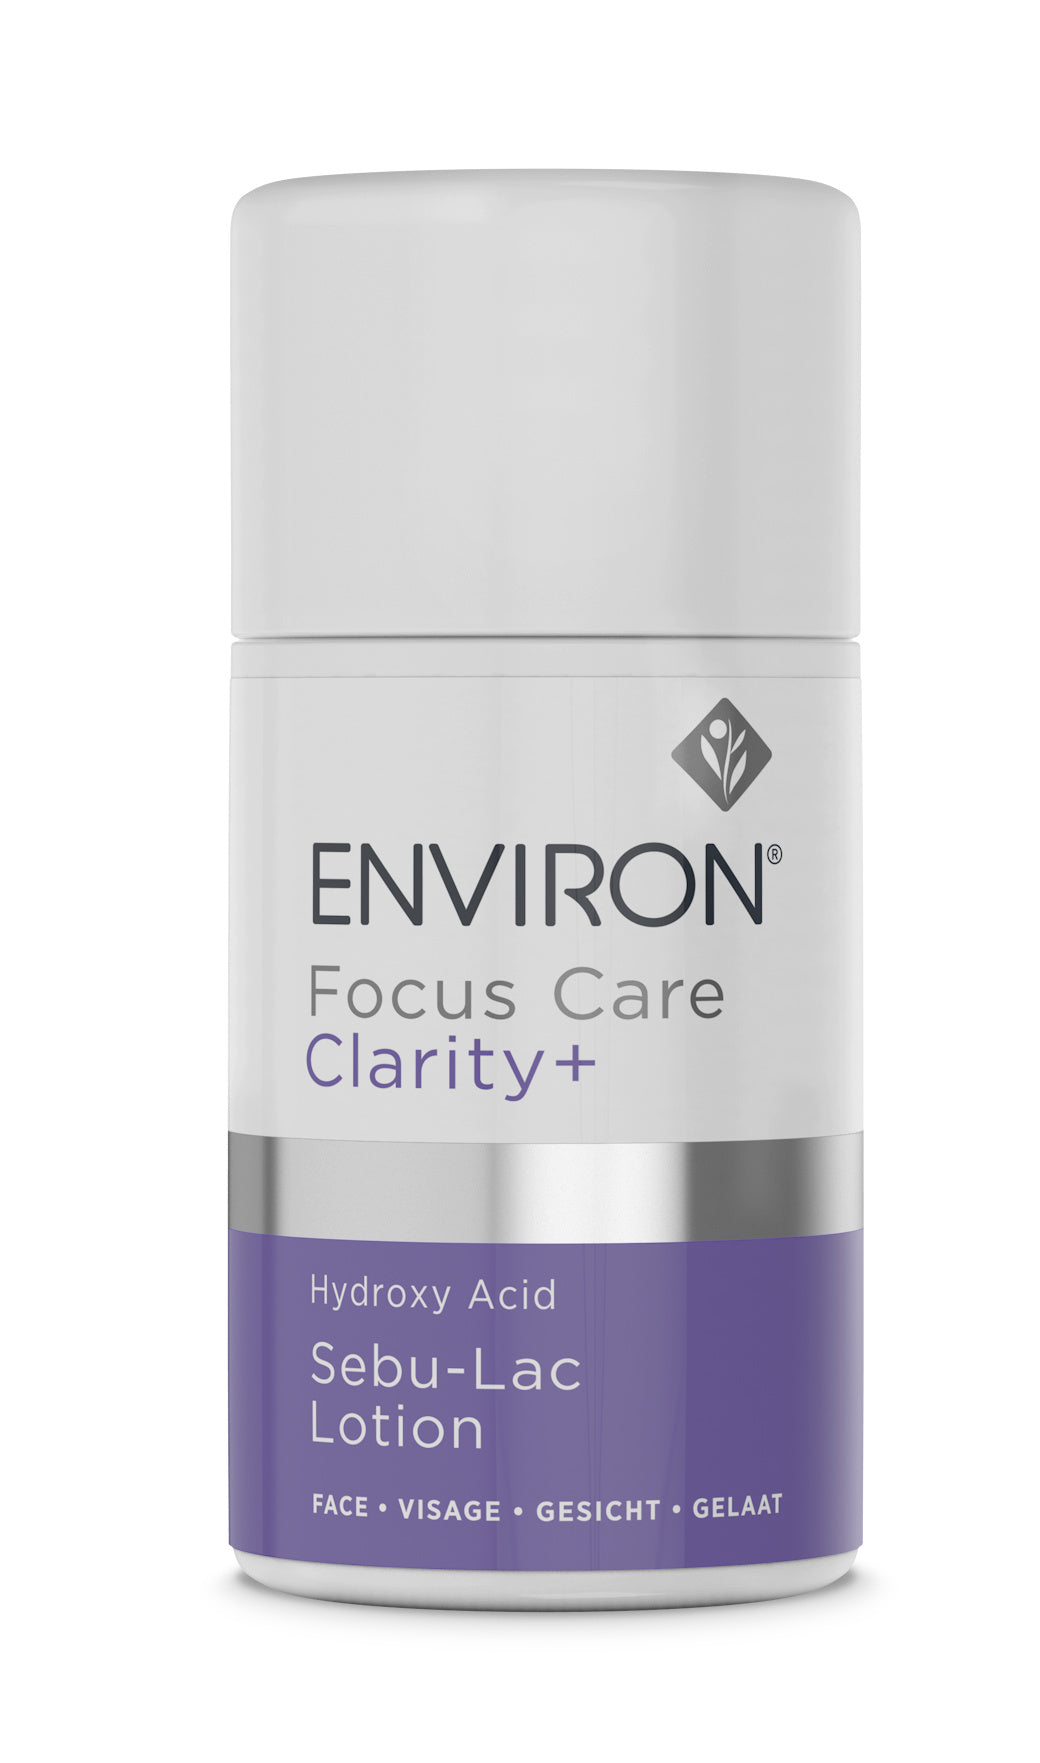 Focus Care Clarity+ | Hydroxy Acid Sebu-Lac Lotion